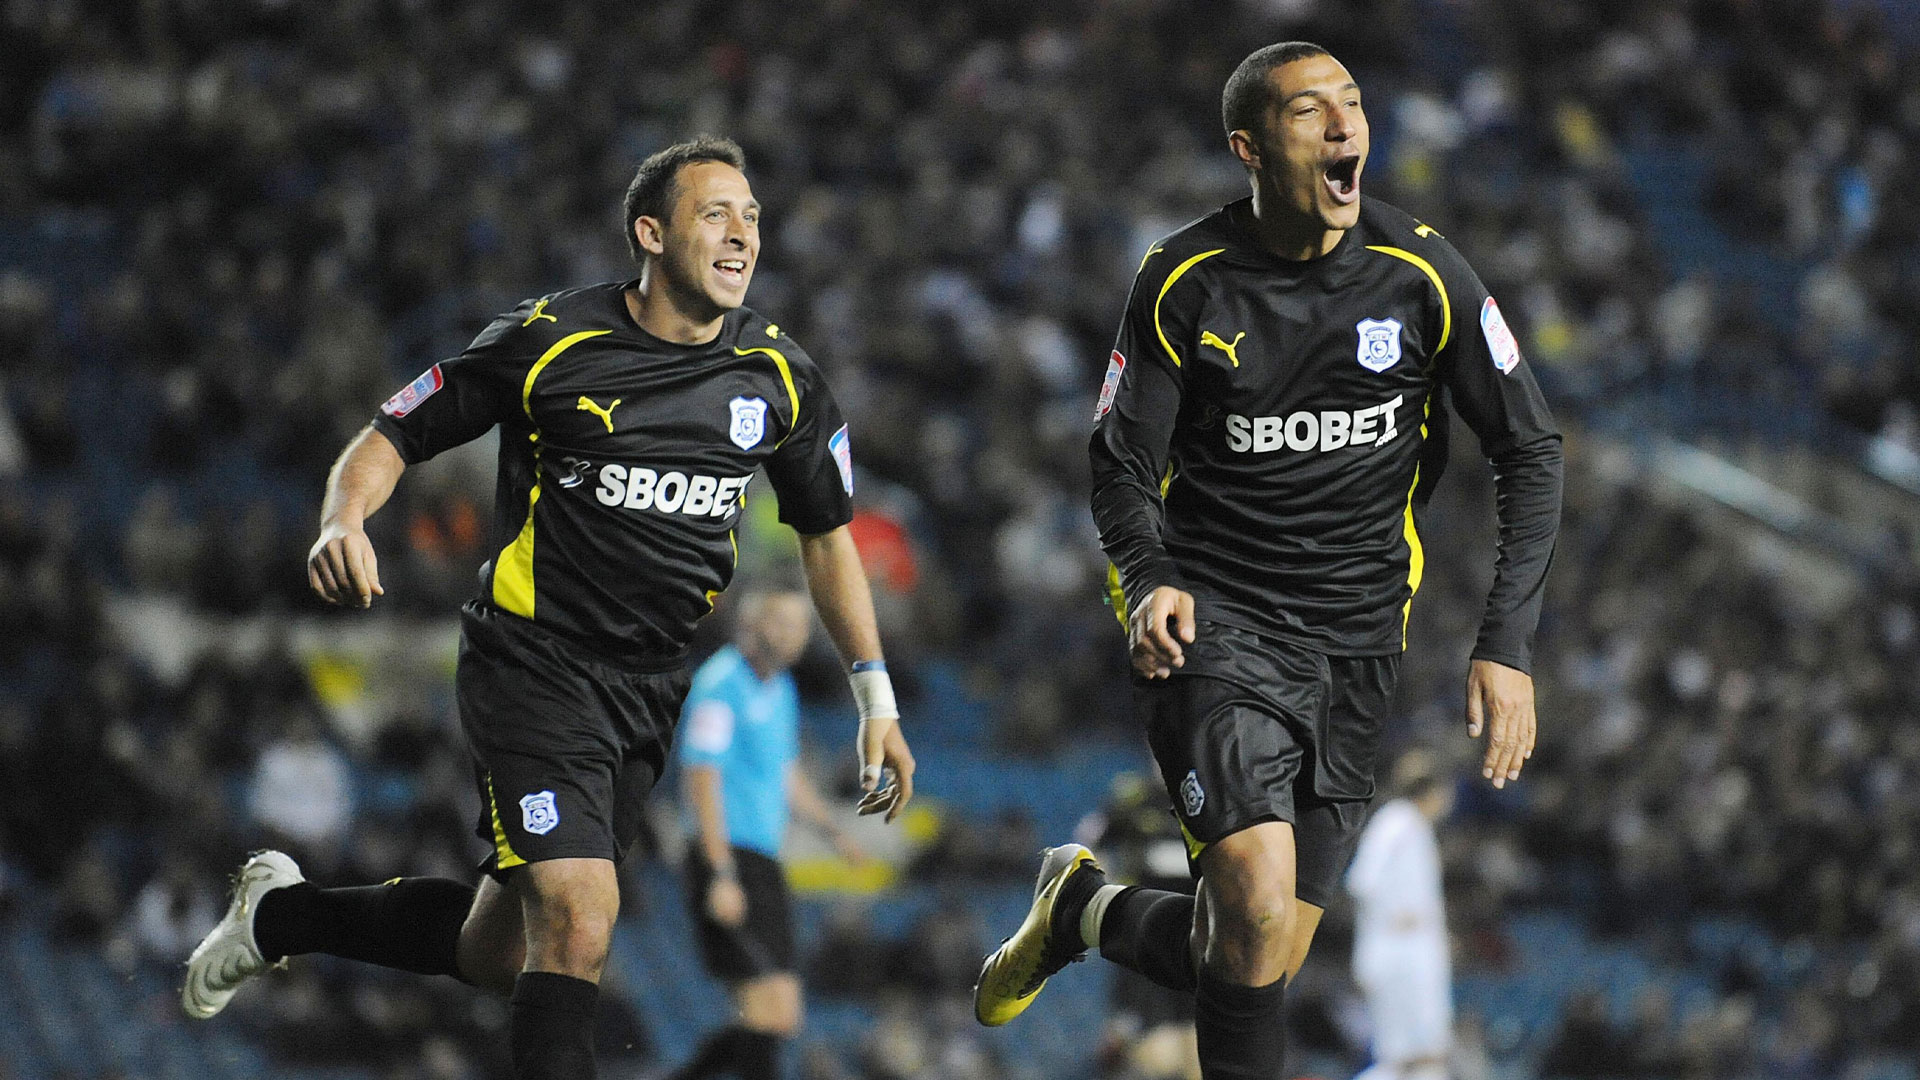 Jay Bothroyd (right) celebrates scoring for Cardiff City, alongside Michael Chopra (left)